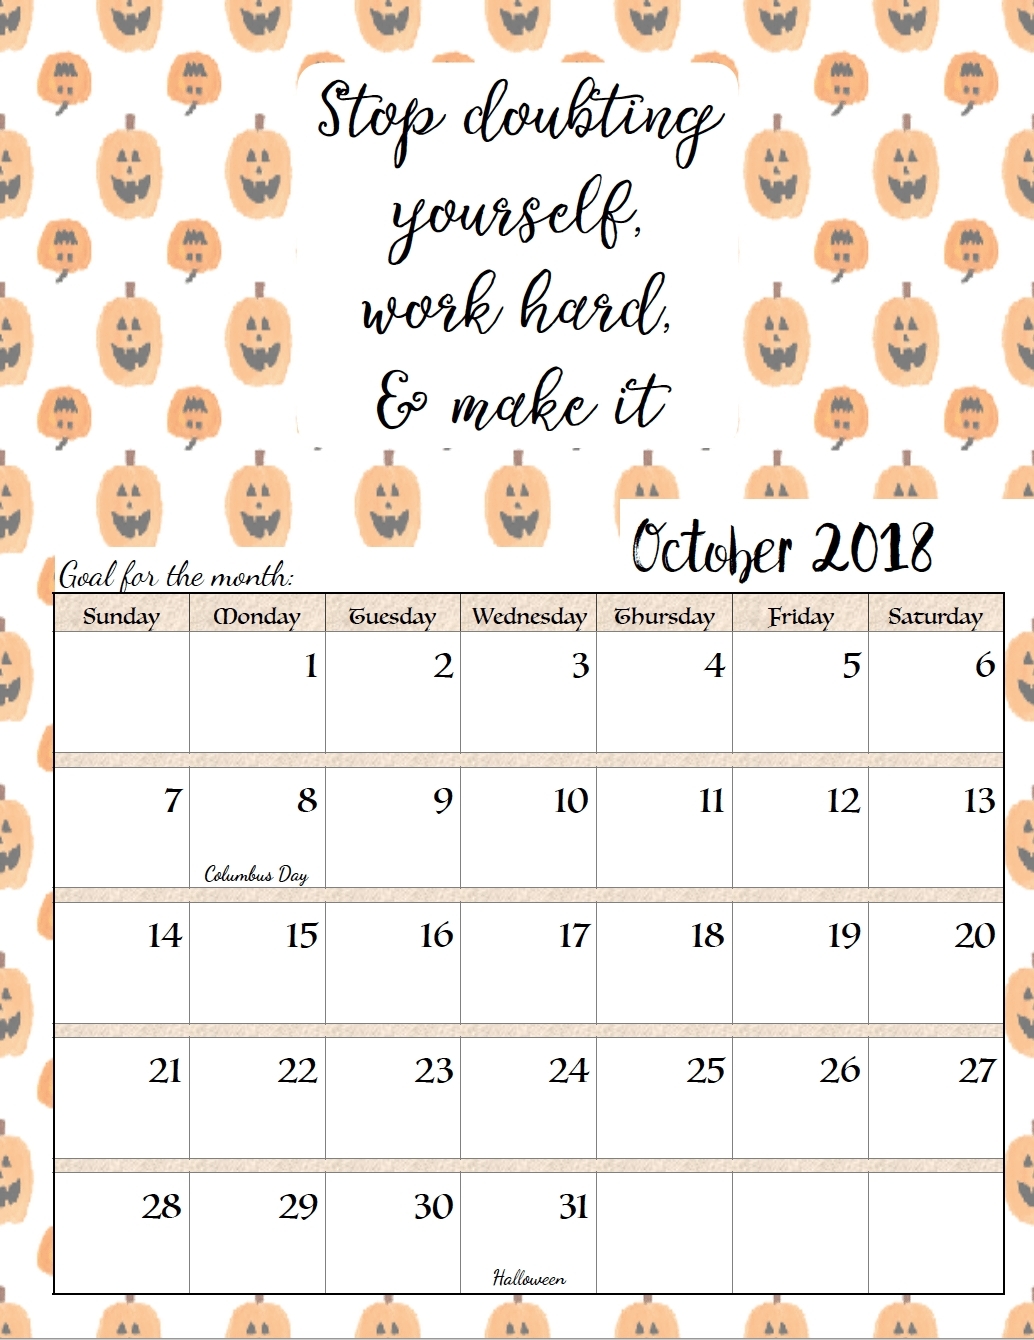 Free Printable Blank Calendar Template | Template Calendar Printable intended for Holiday Themed Cupcake Templates For Calendar